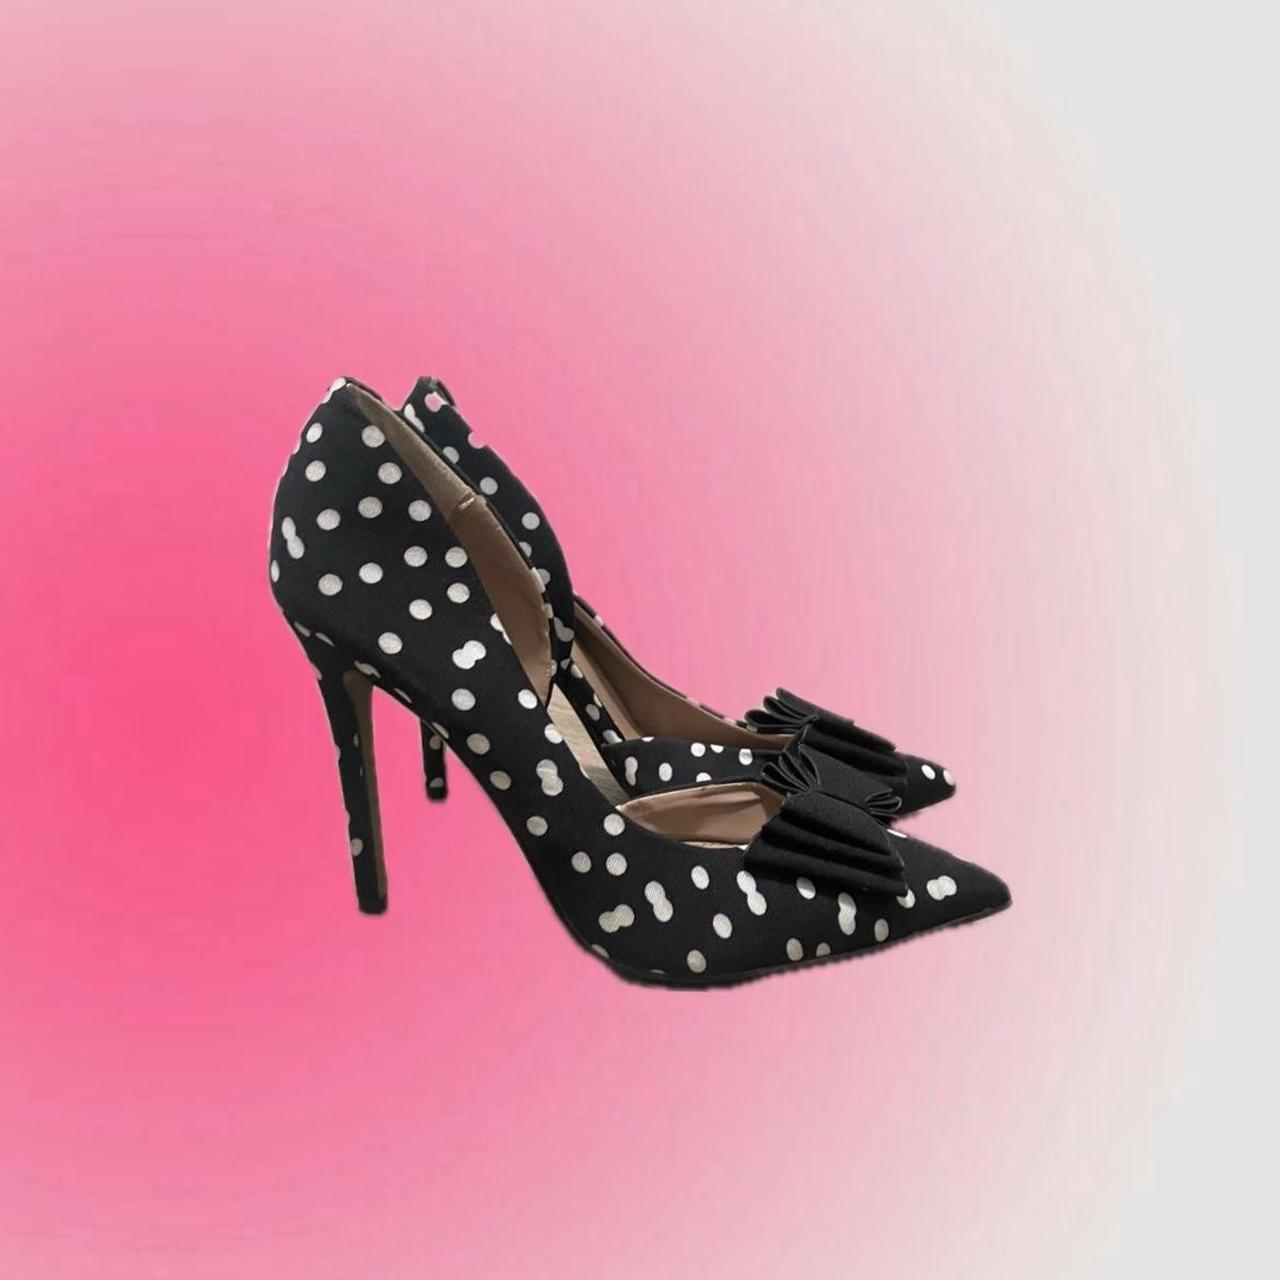 Cute polka dot Betsey Johnson heels 🖤 Have THE... - Depop